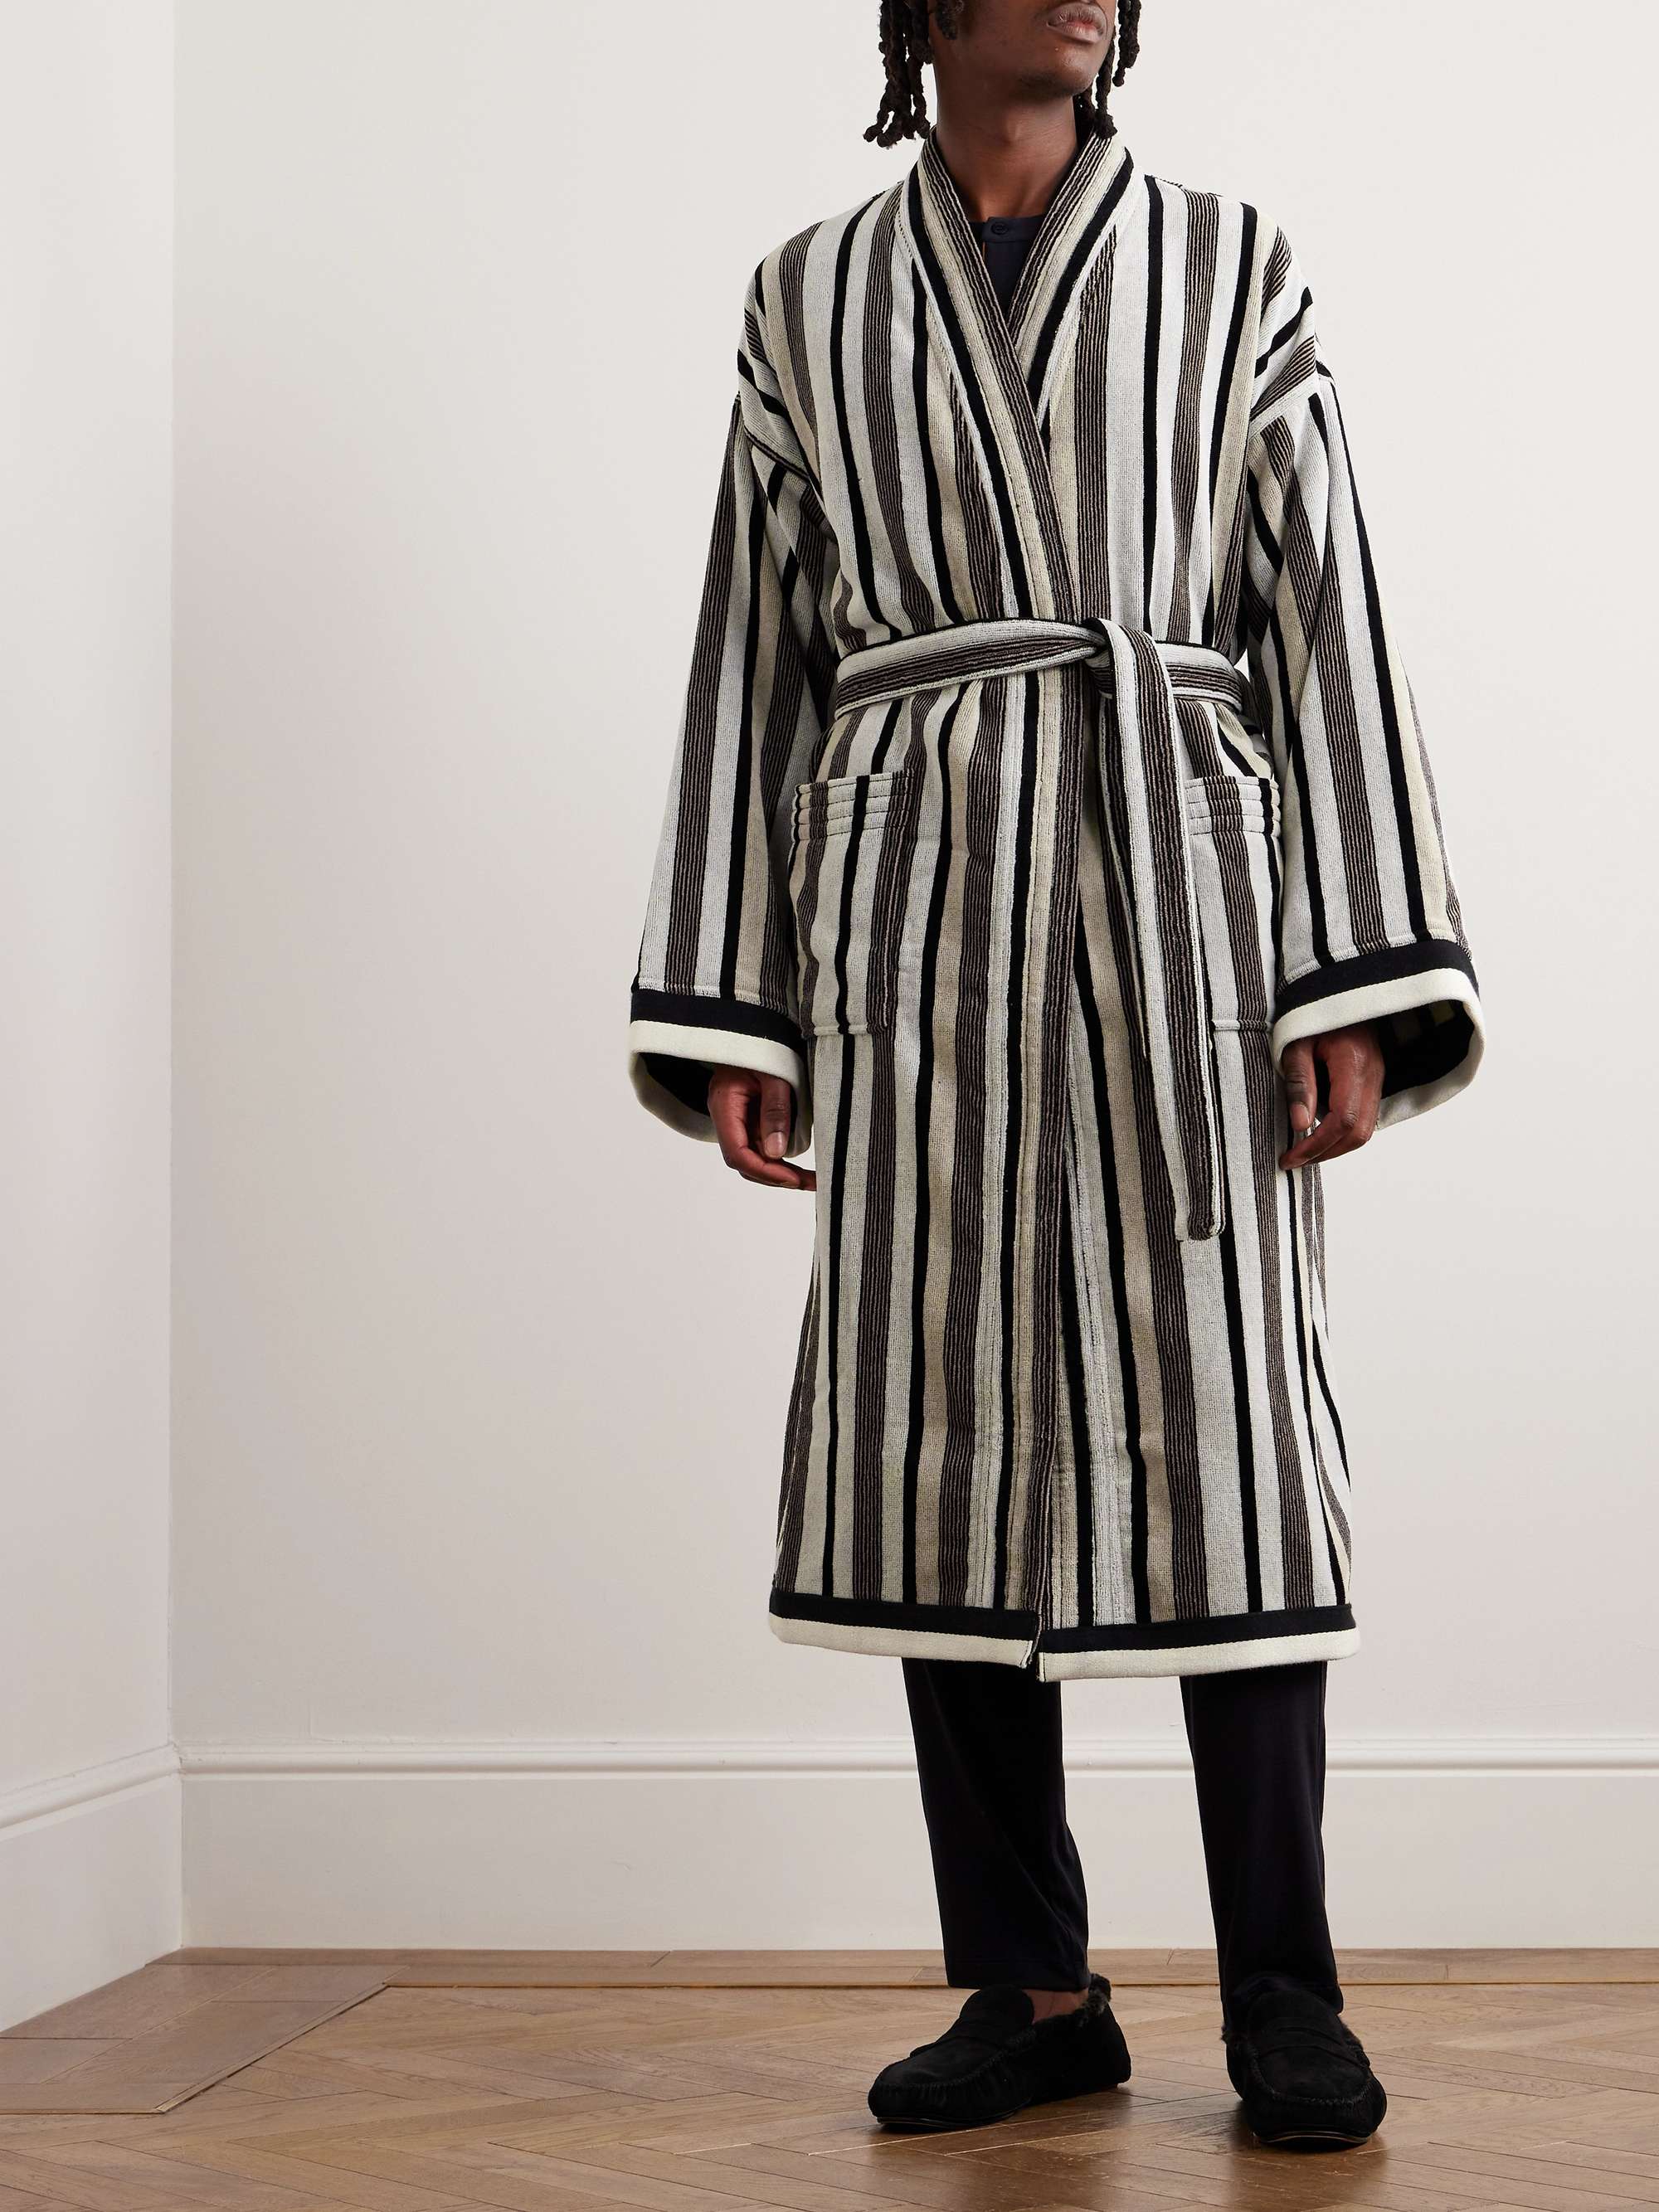 MISSONI HOME Craig Striped Cotton-Terry Jacquard Robe for Men | MR PORTER